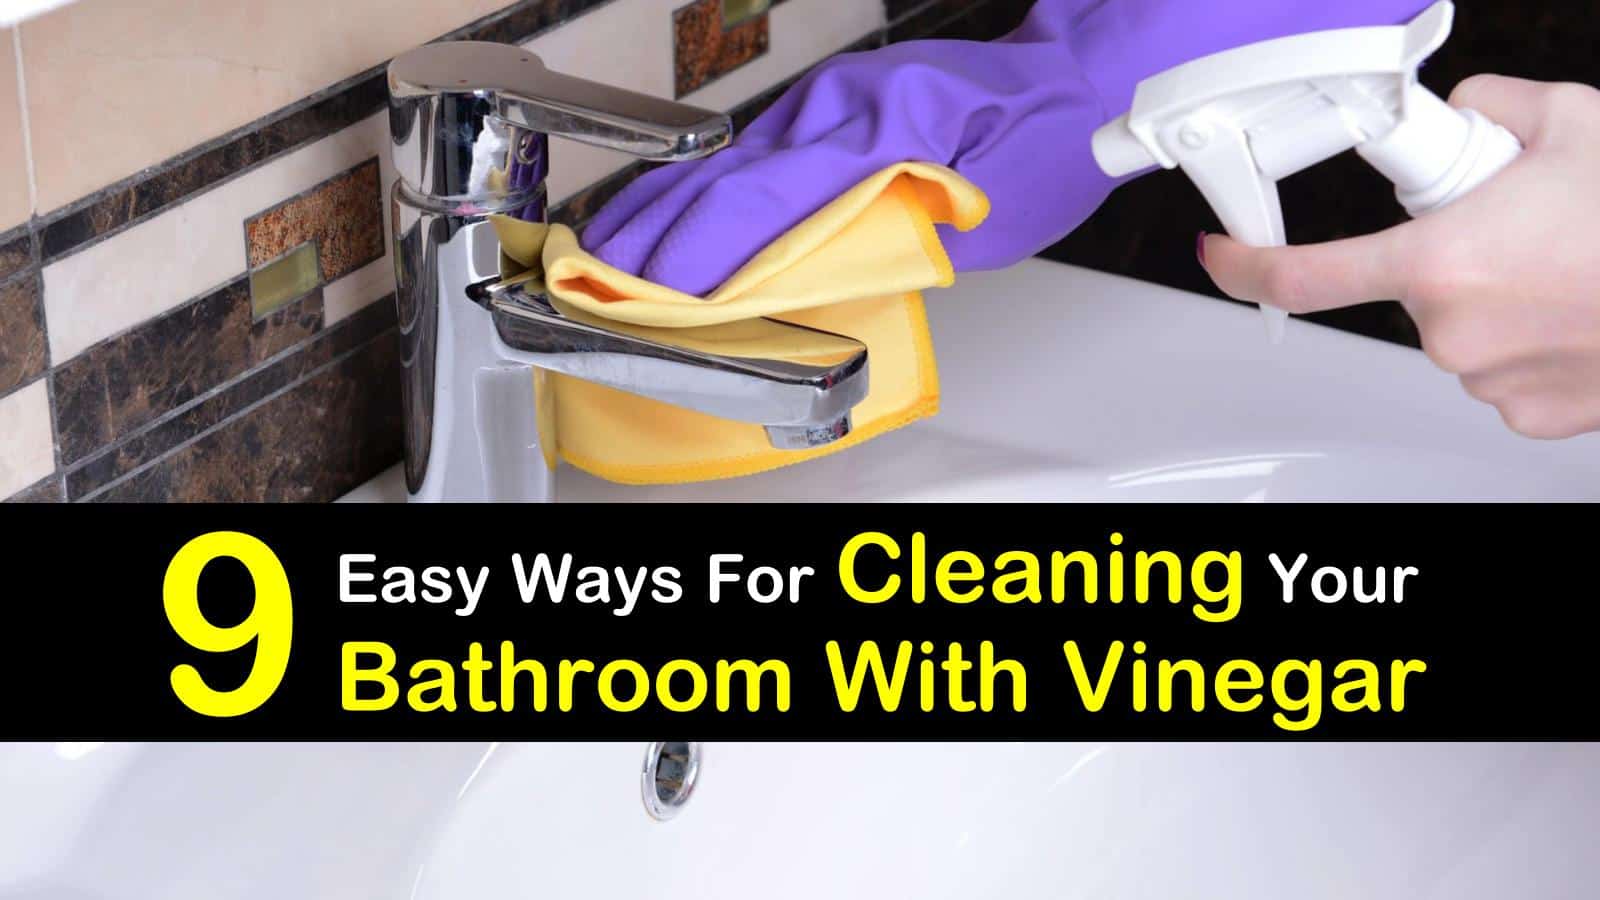 Cleaning A Bathroom With Vinegar, Best Way To Clean Bathtub With Vinegar